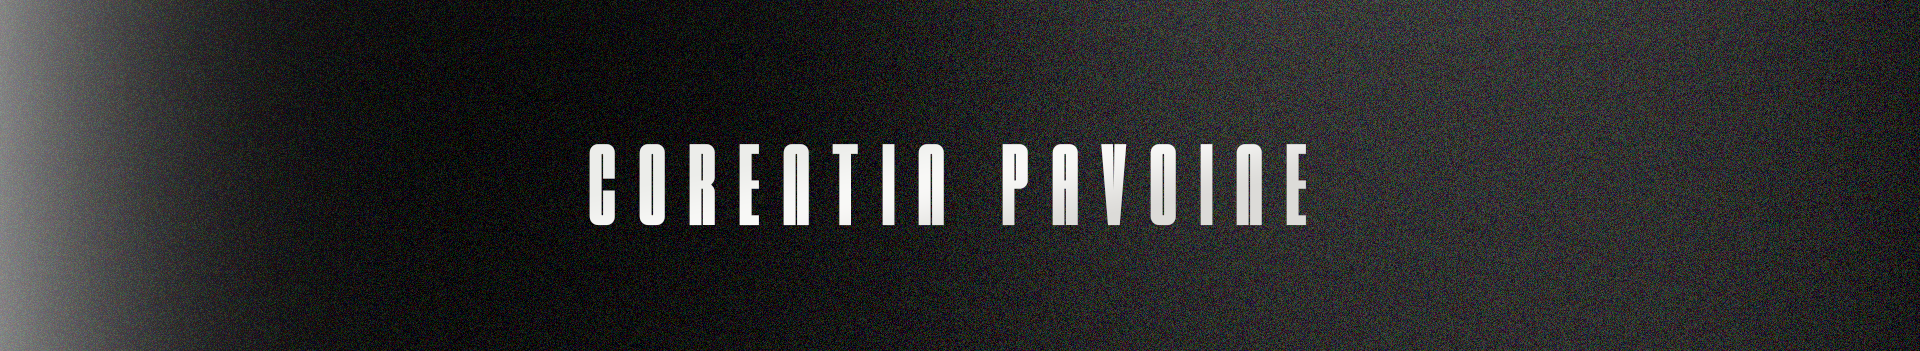 Corentin Pavoine's profile banner